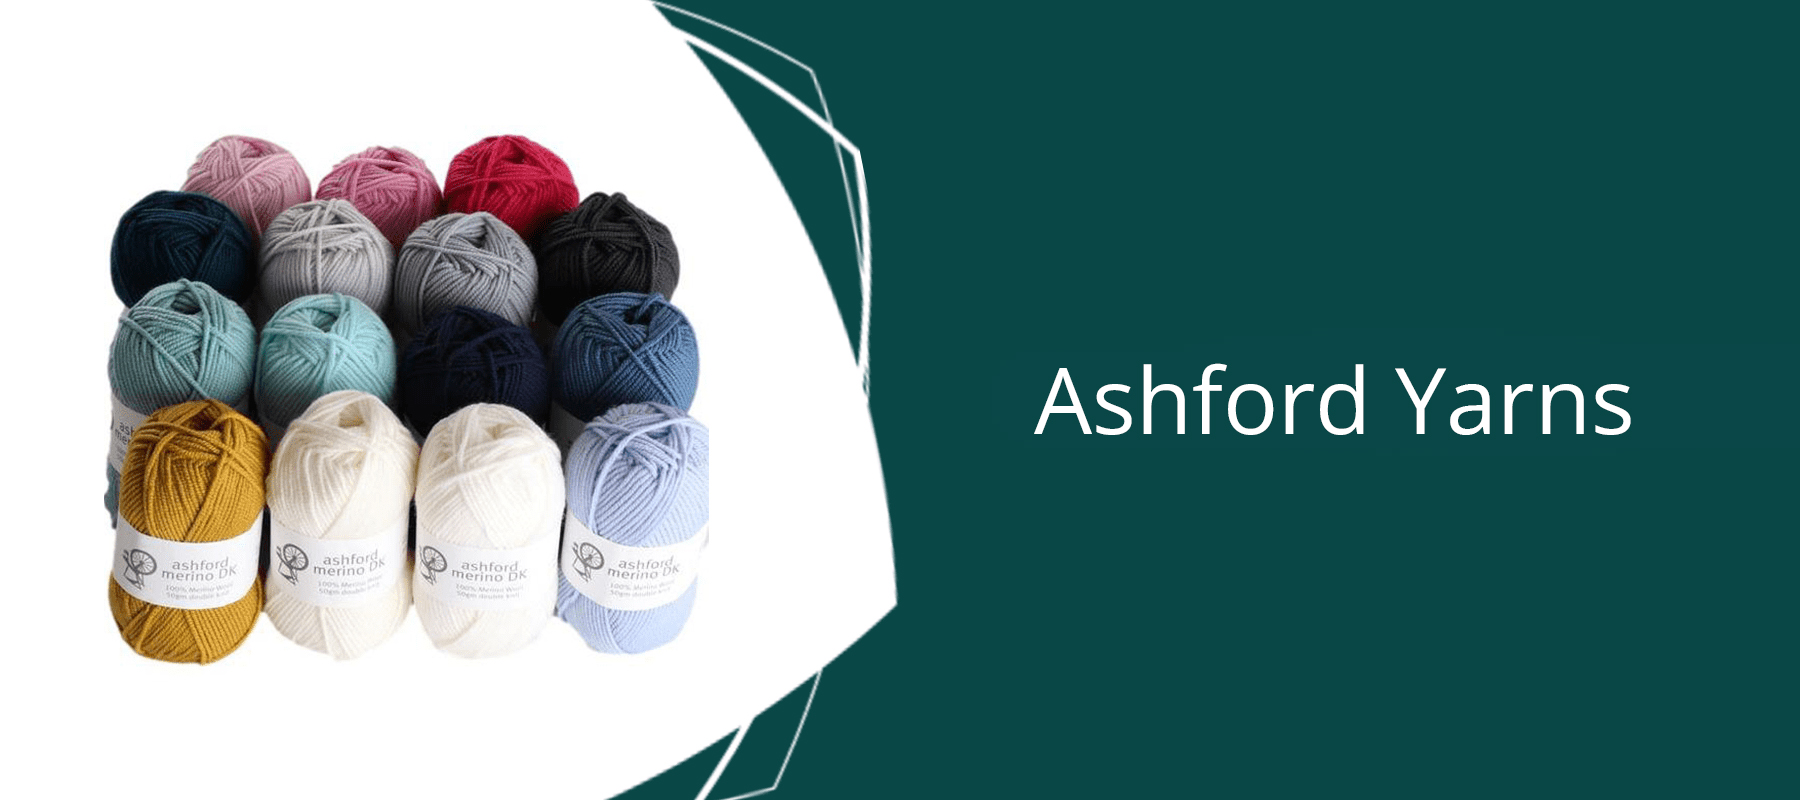 Ashford Yarns: Knitting, Crochet, and Undyed